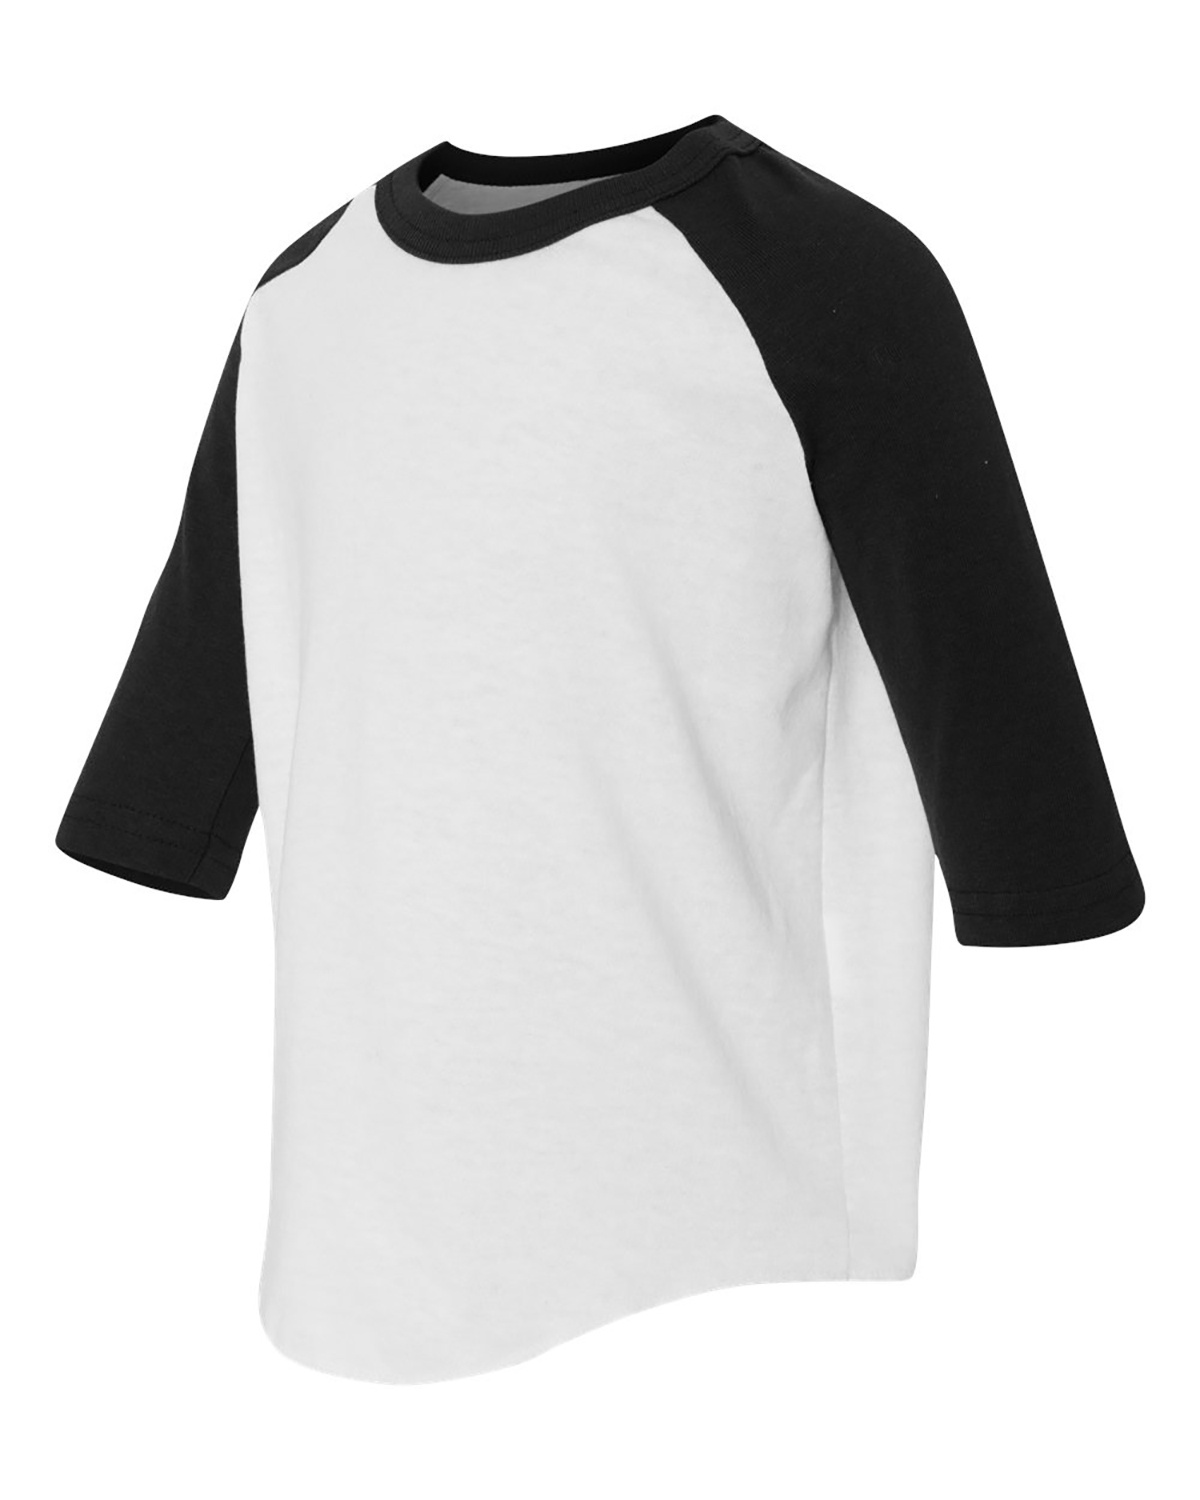 'Augusta Sportswear 422 Toddler 3/4-Sleeve Baseball Jersey'